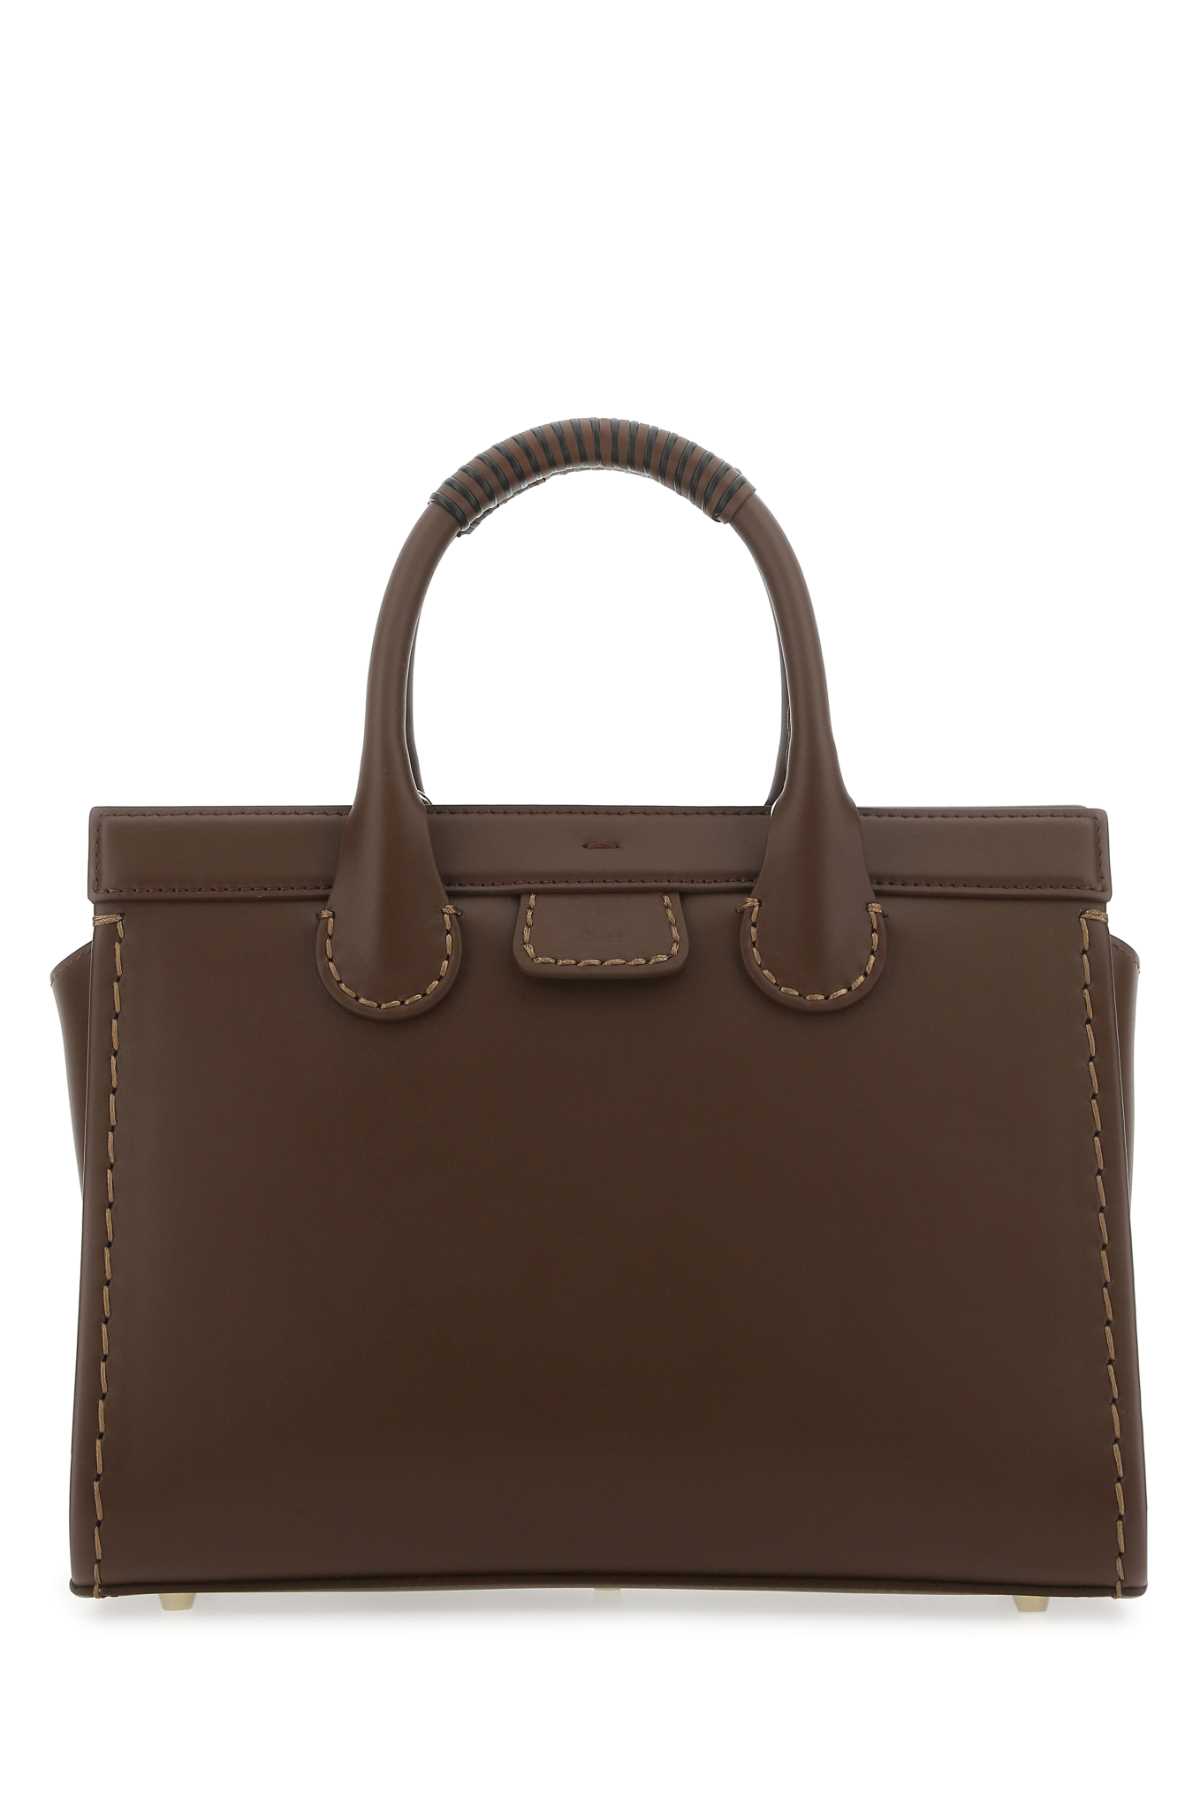 Chloé Brown Leather Medium Edith Handbag